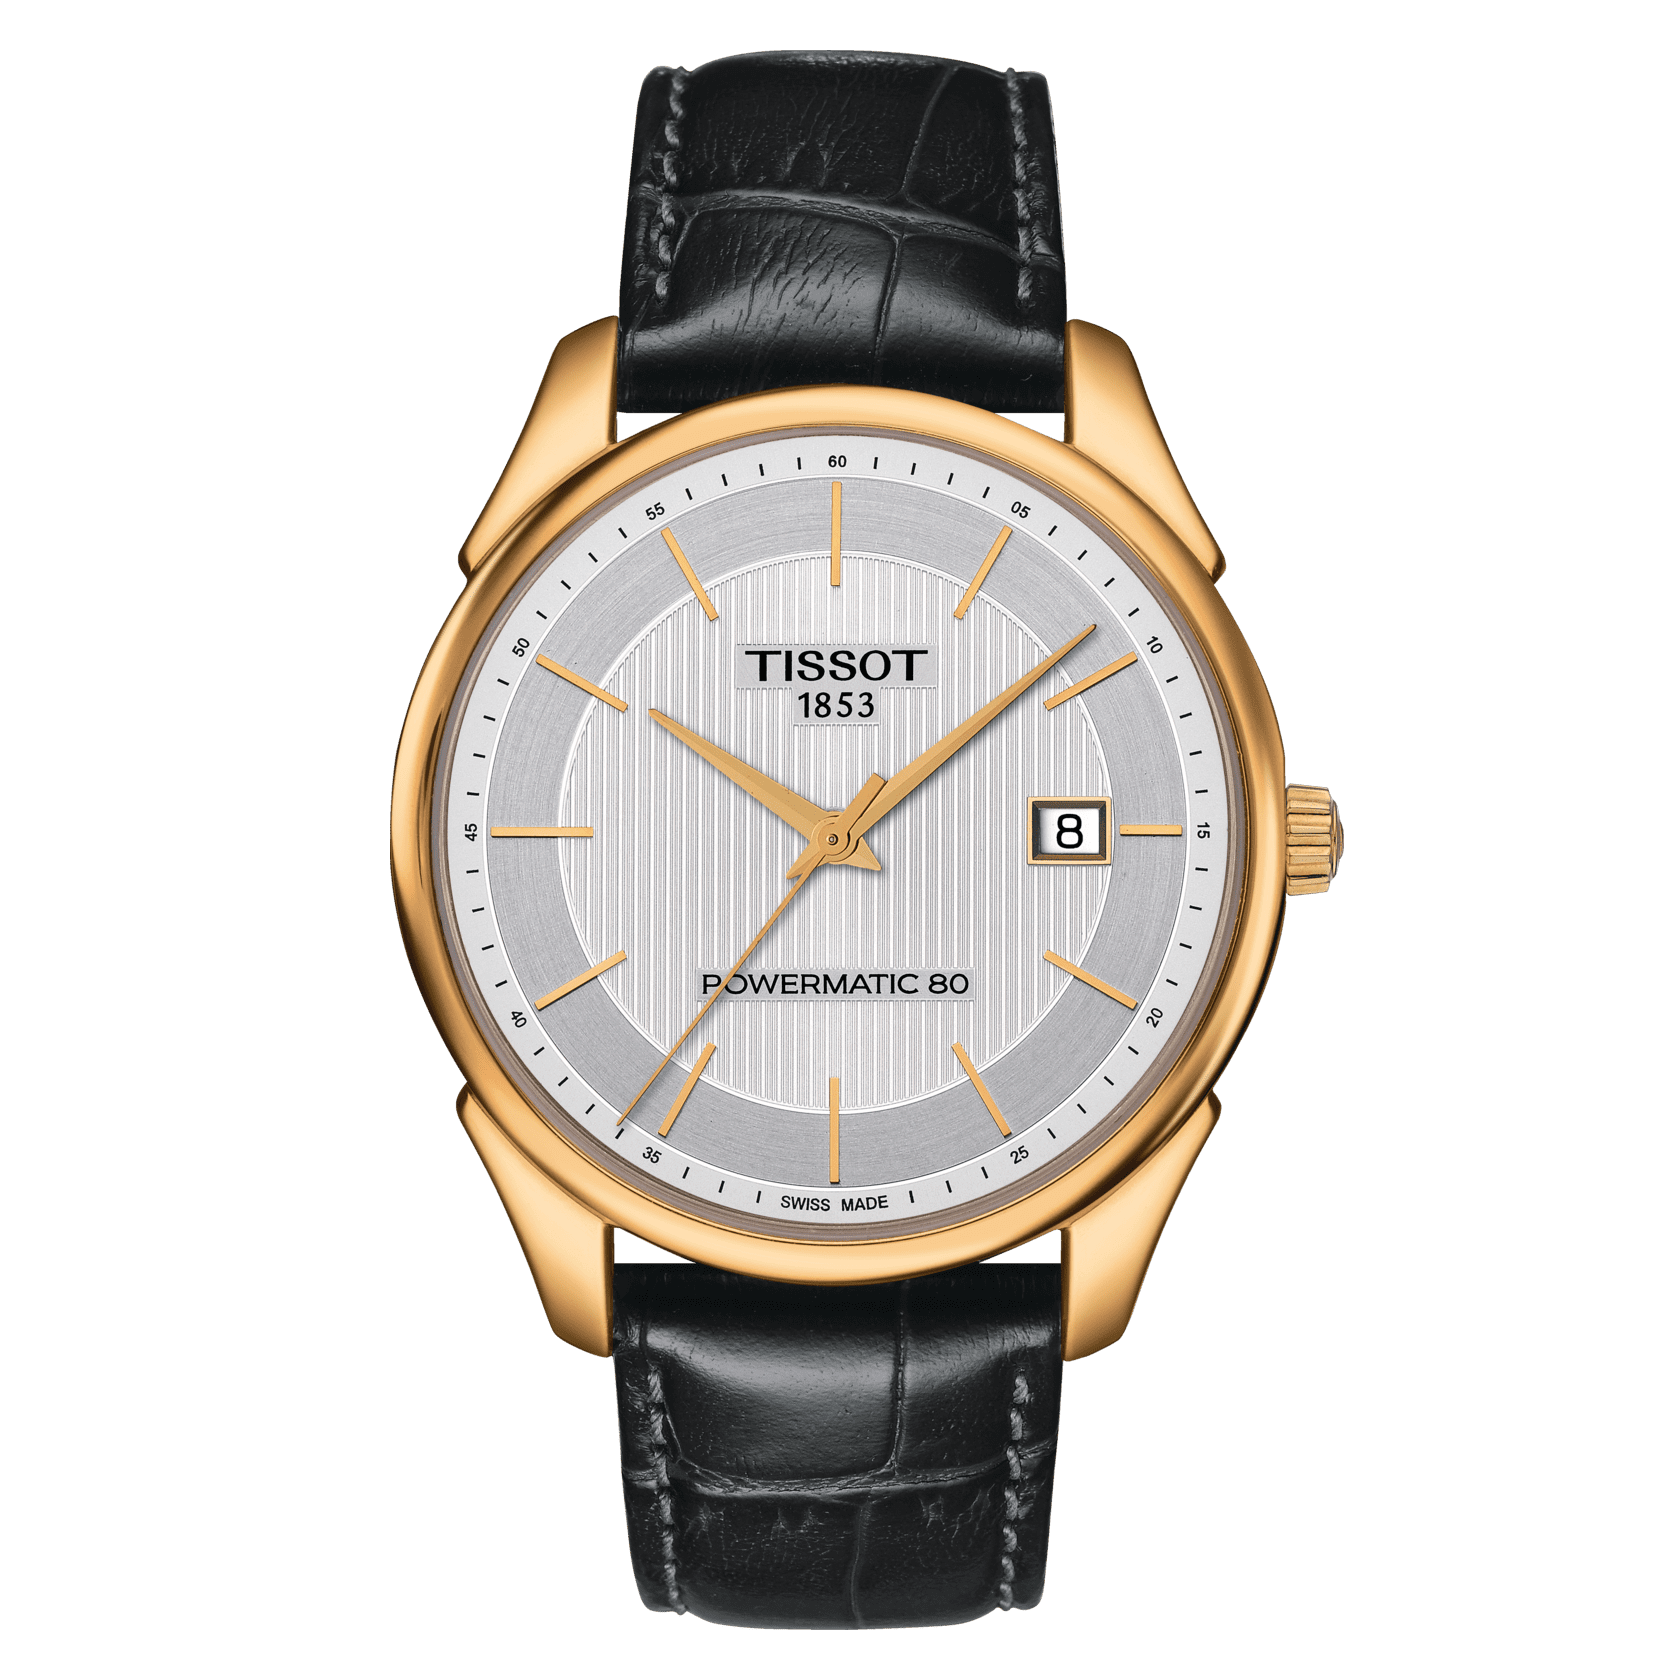 Replica Burberry Watch